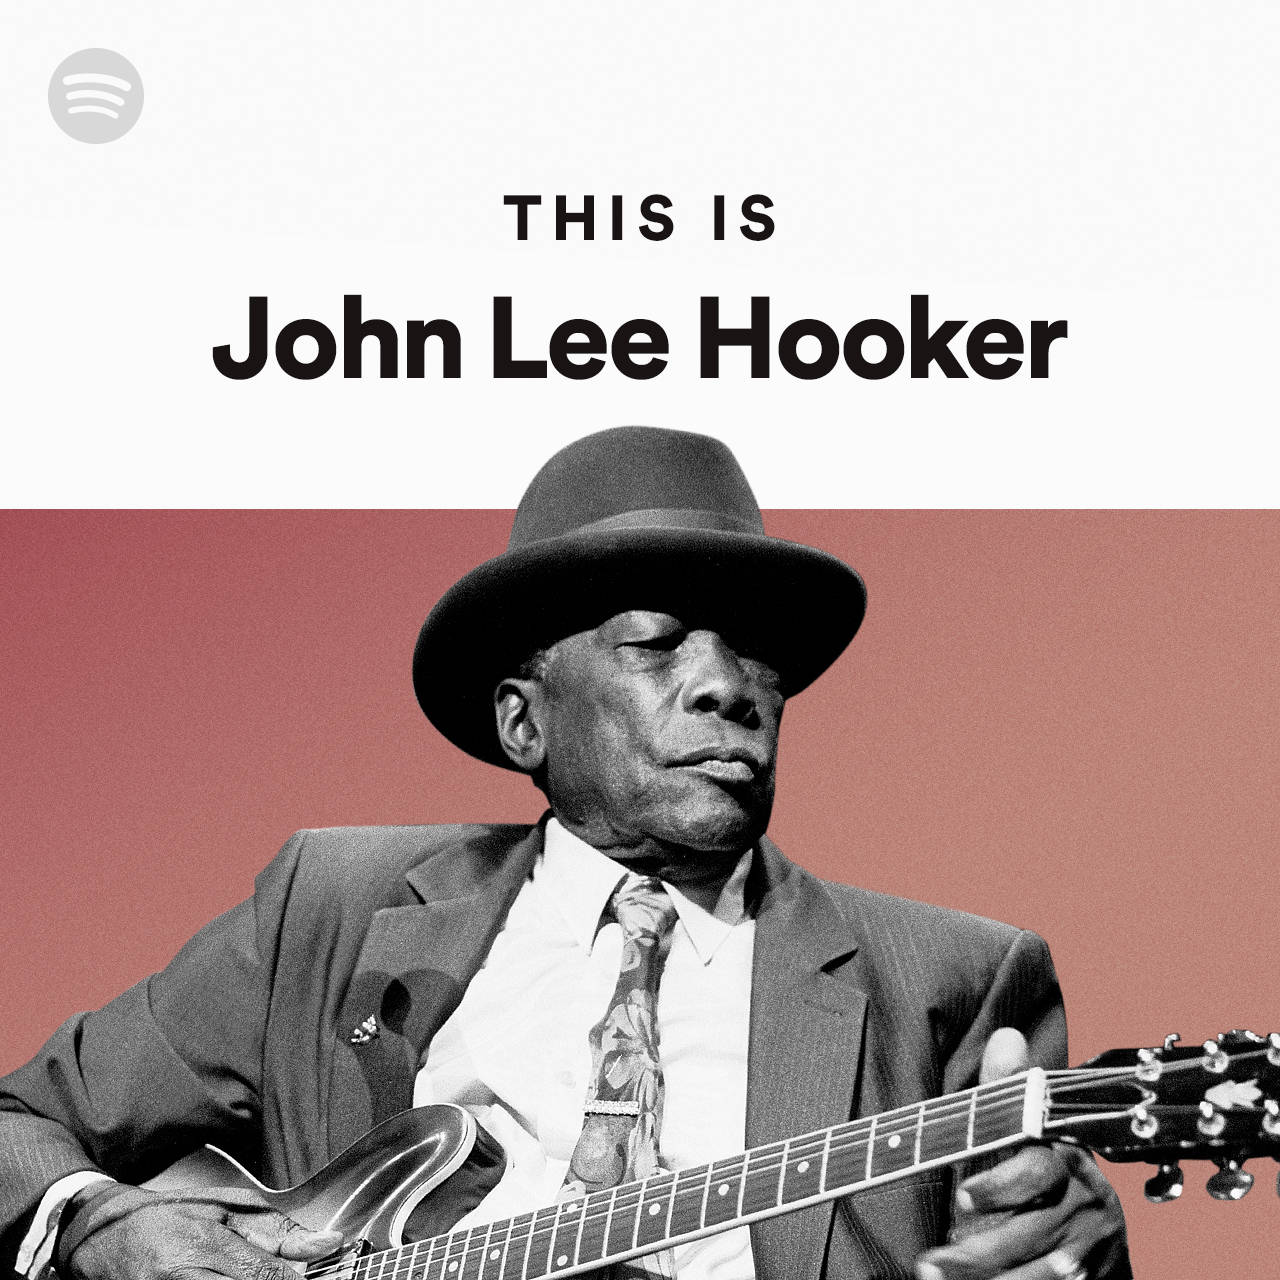 John Lee Hooker Spotify Album Cover Wallpaper